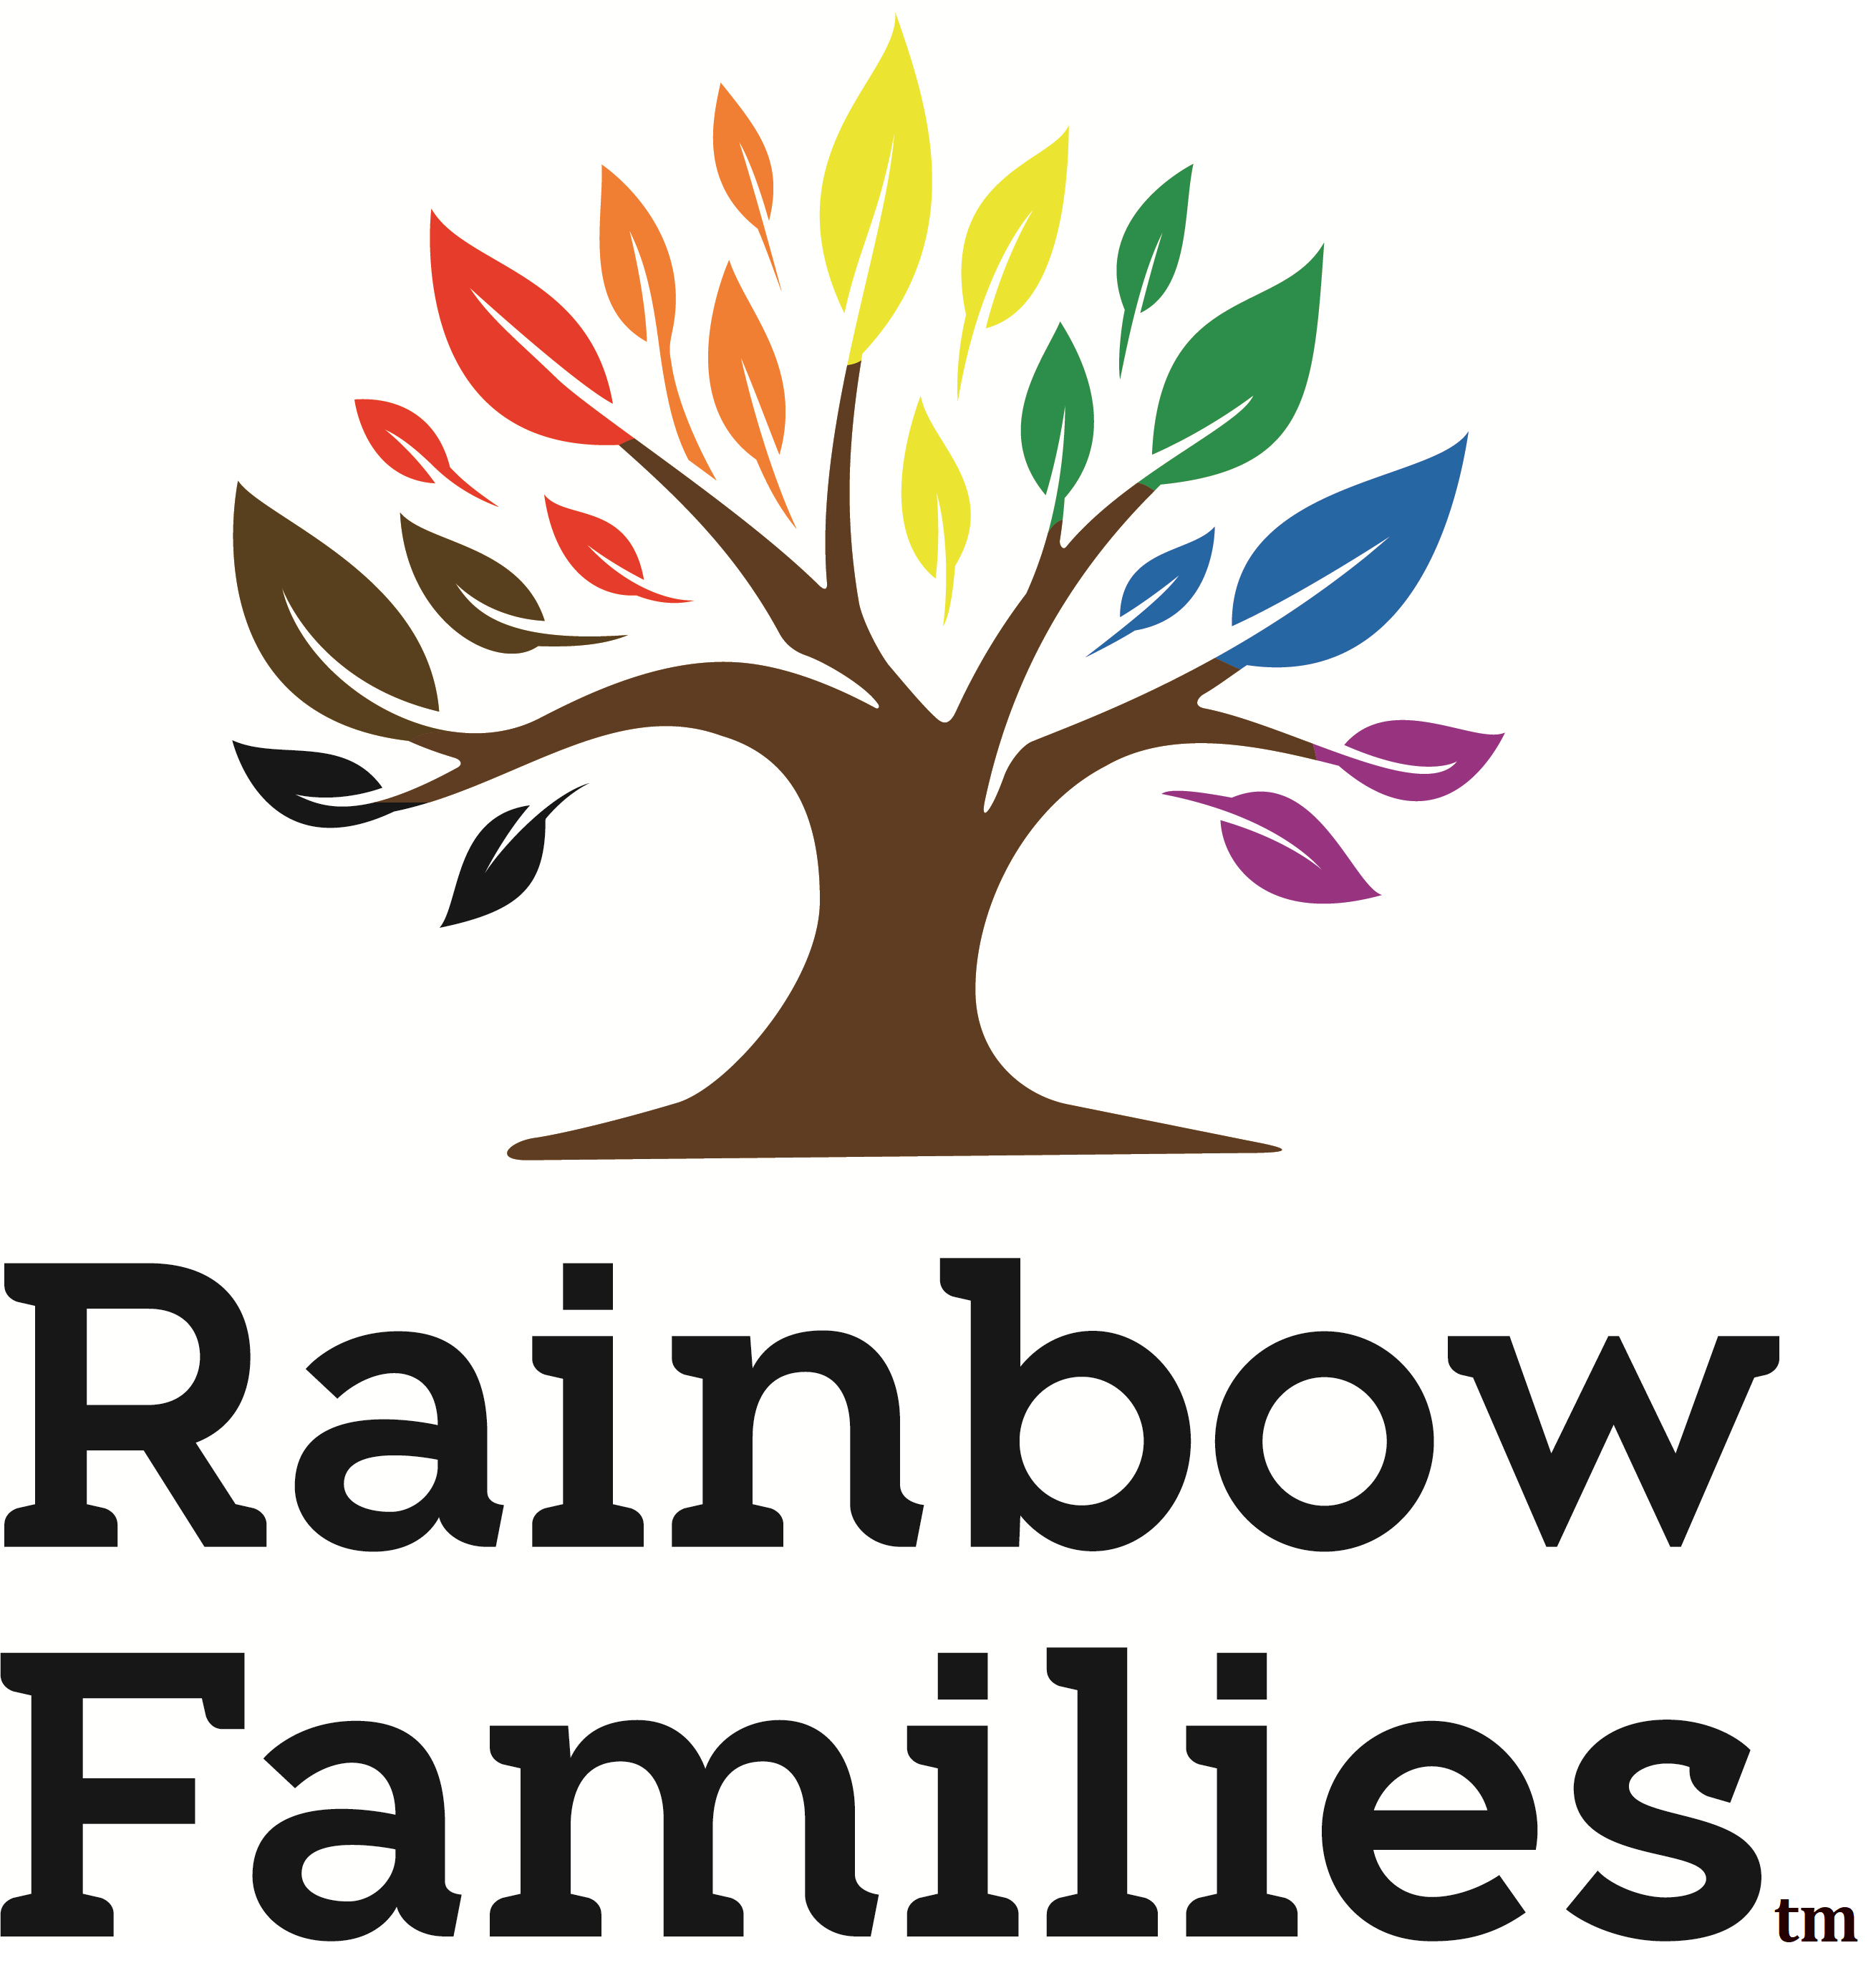 Rainbow Families Logo